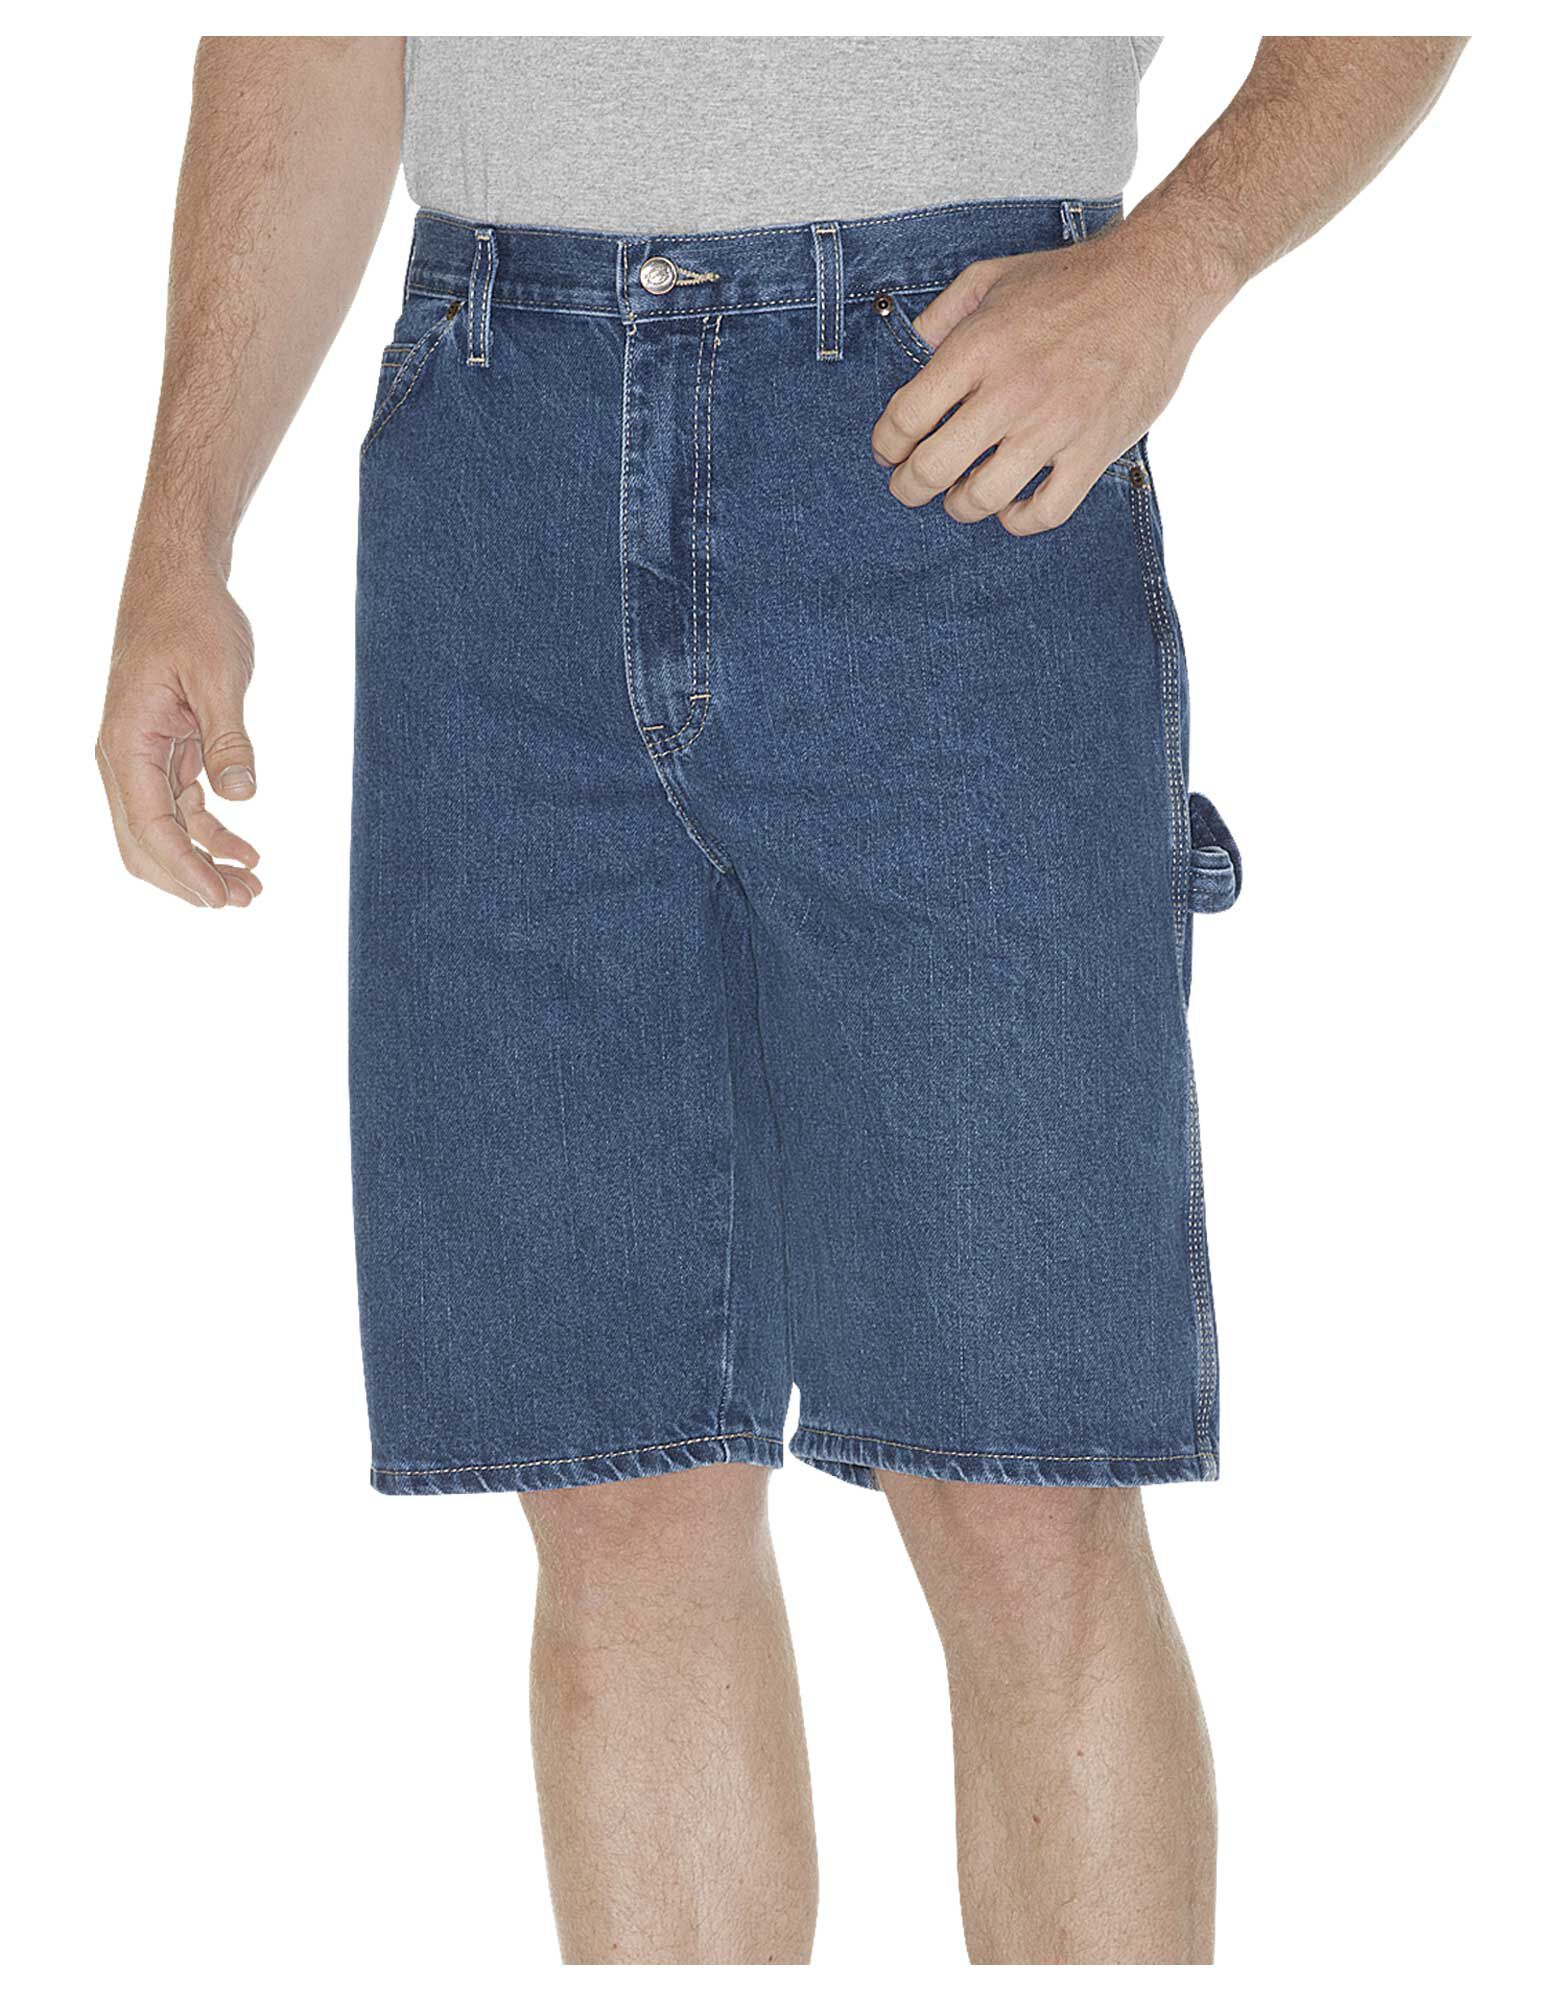 carpenter jean shorts